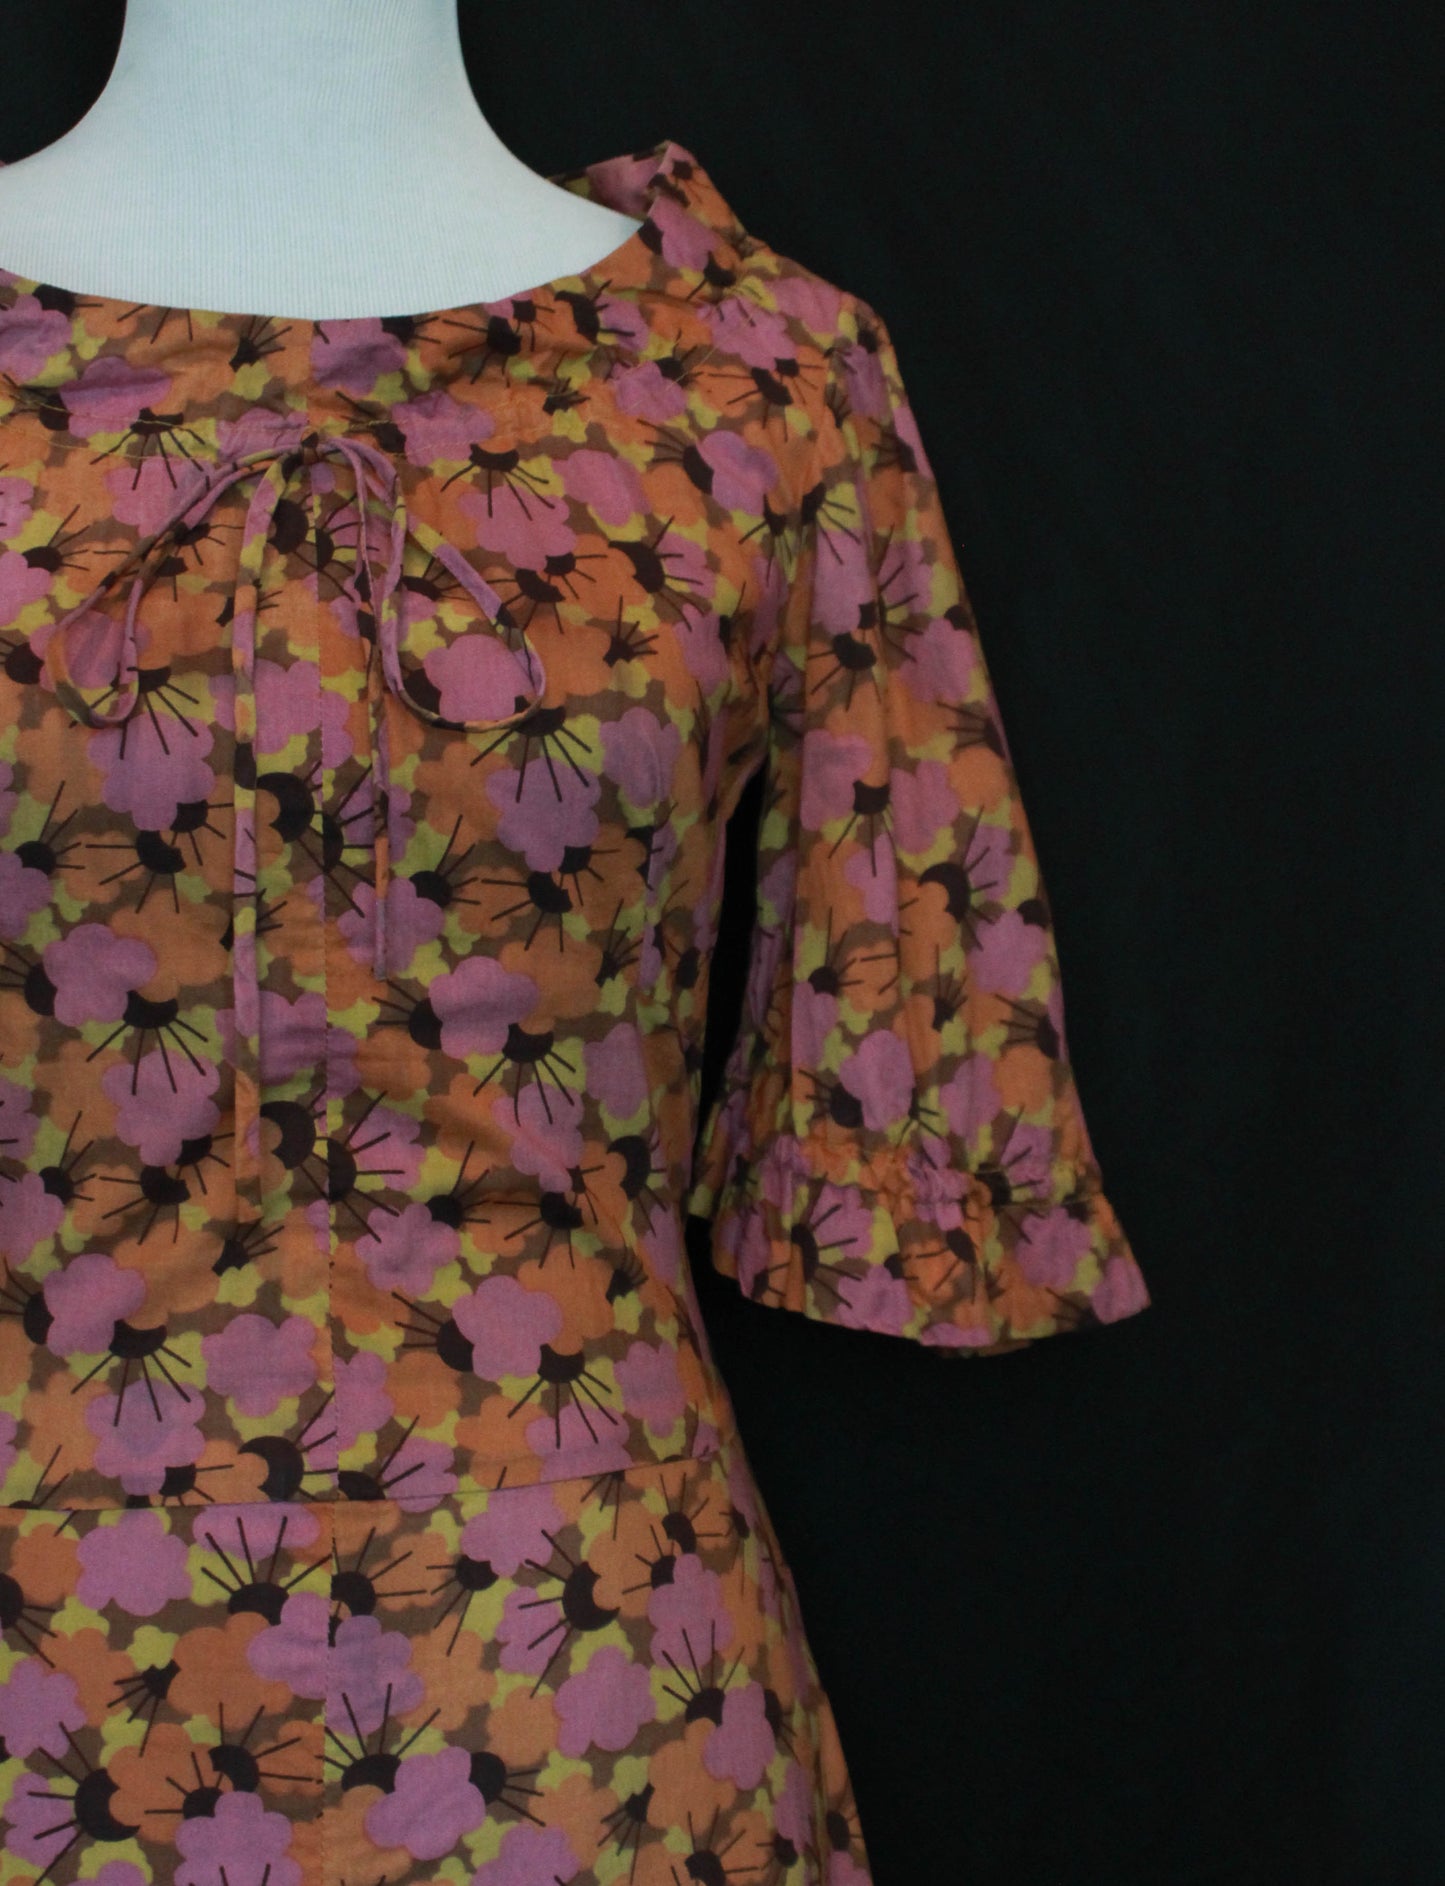 Women's Vintage 60's Biba Flower Pattern Dress - Small/Medium